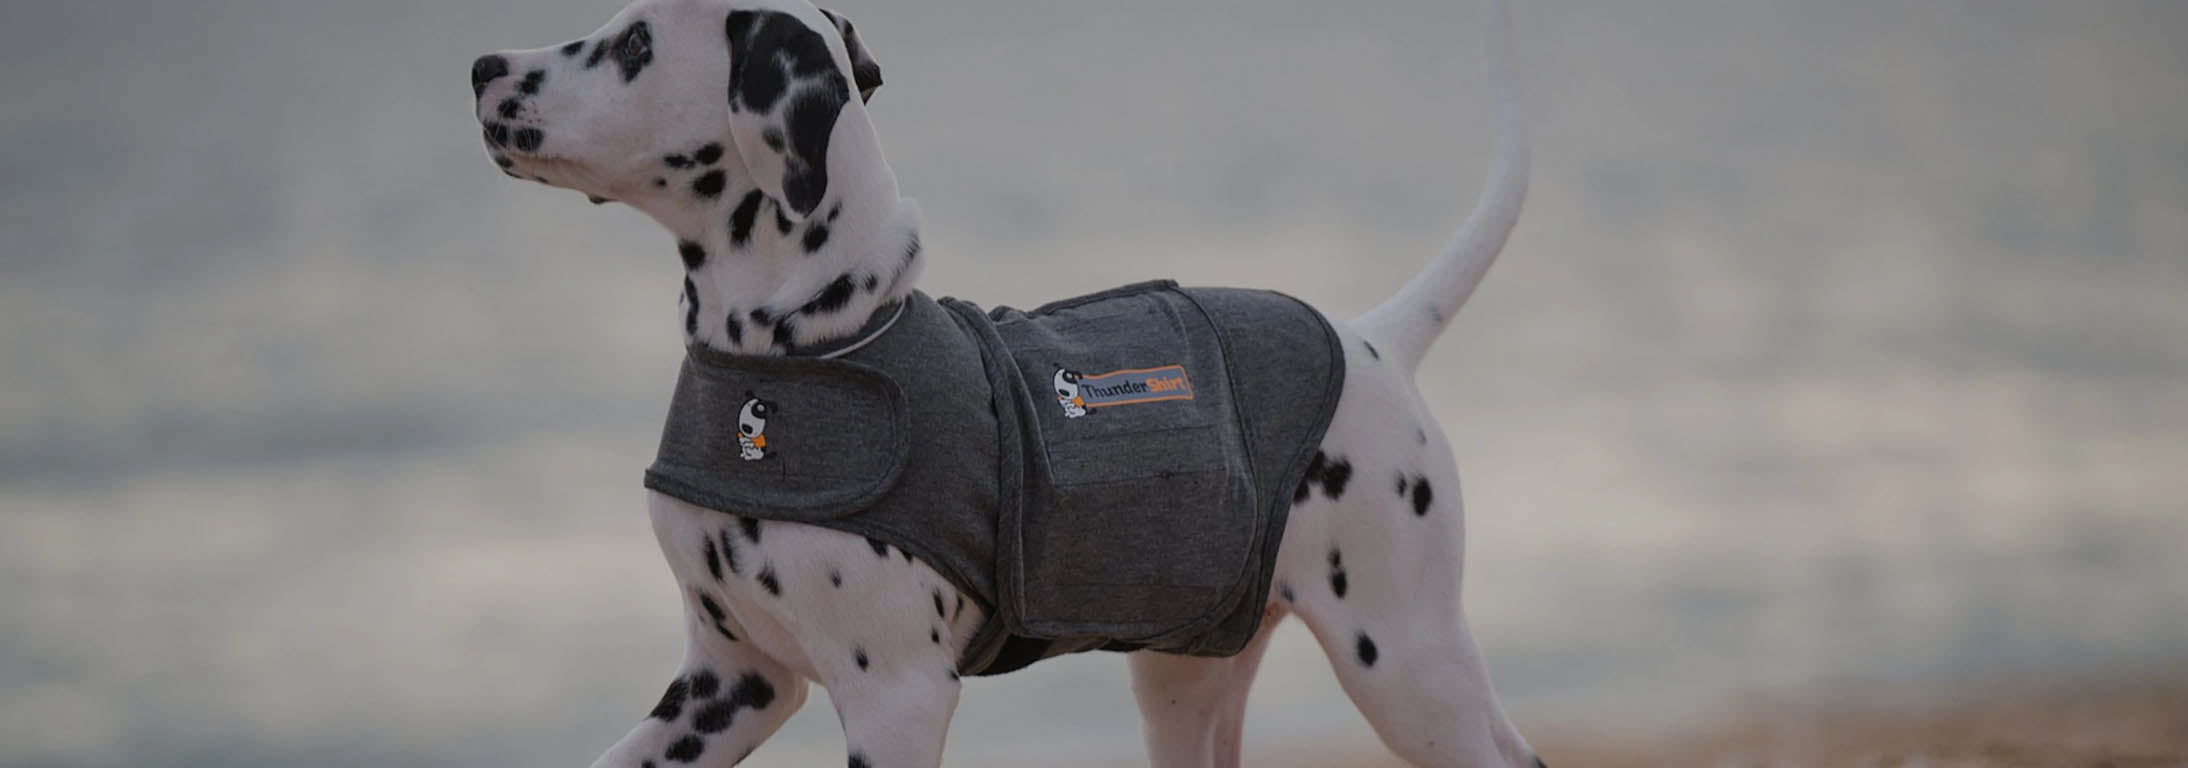 Peace Sign Dog Collar peaceful Retro Designer Dog 